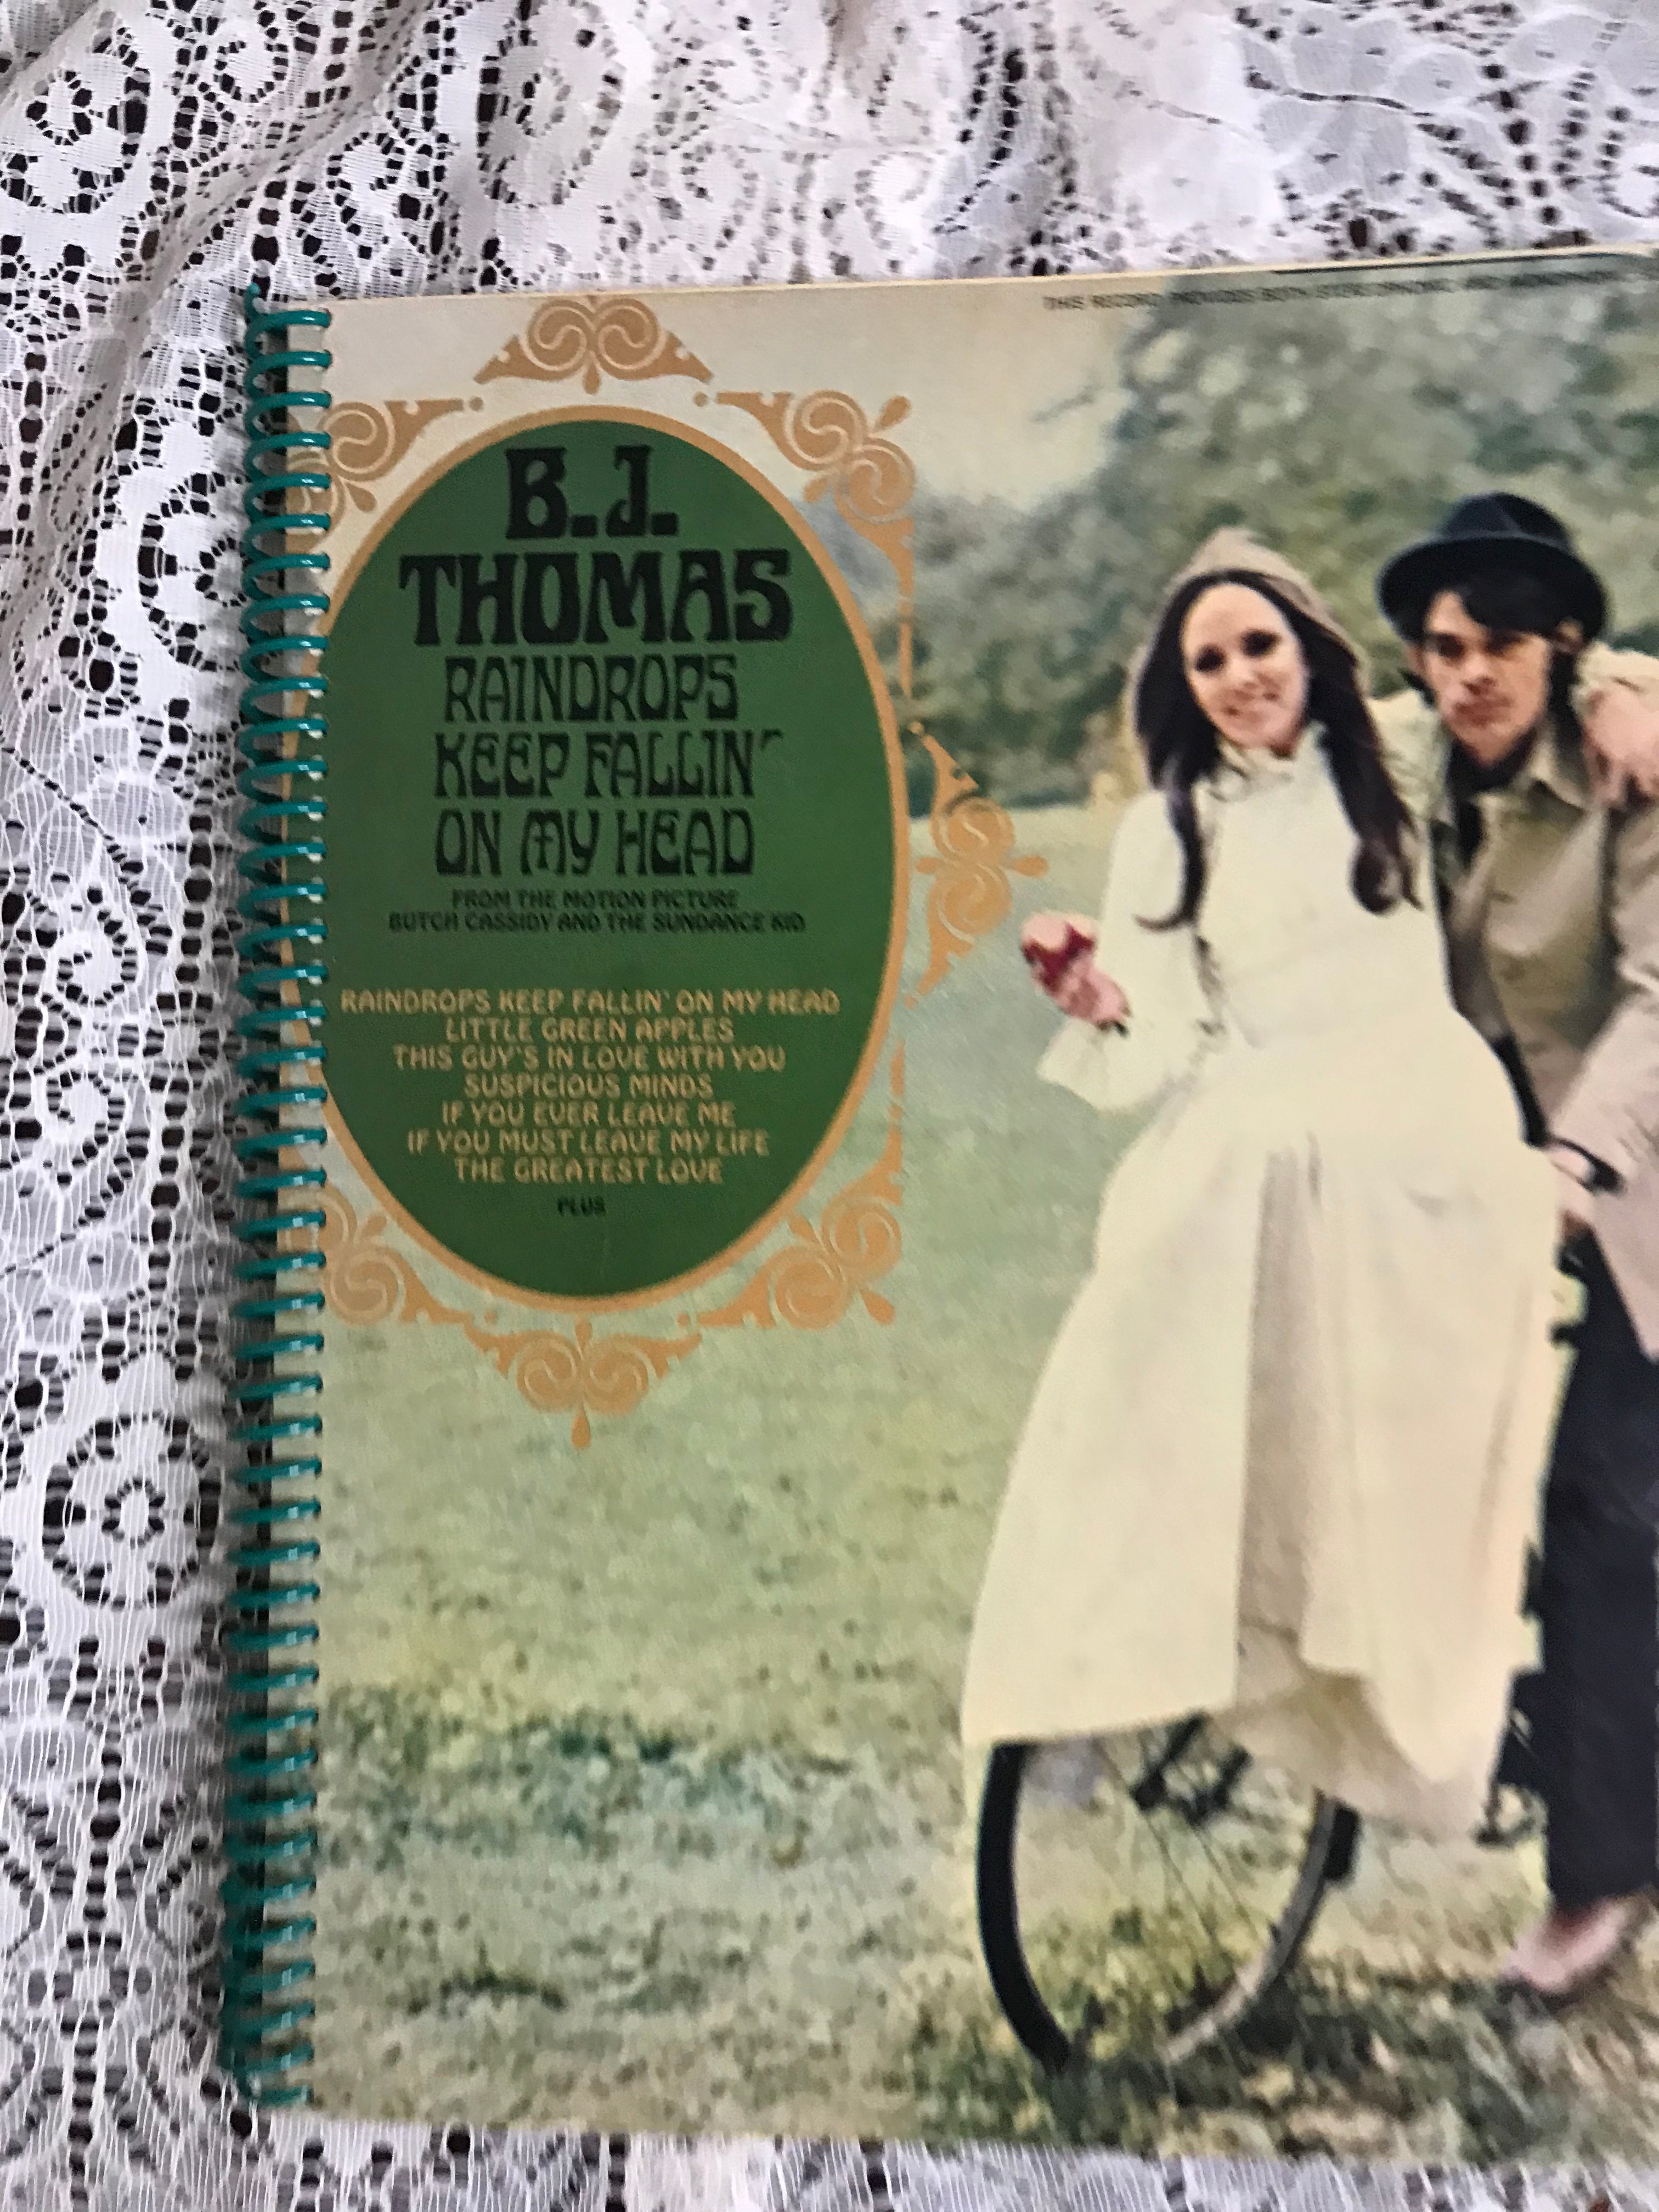 BJ Thomas Album Cover Notebook